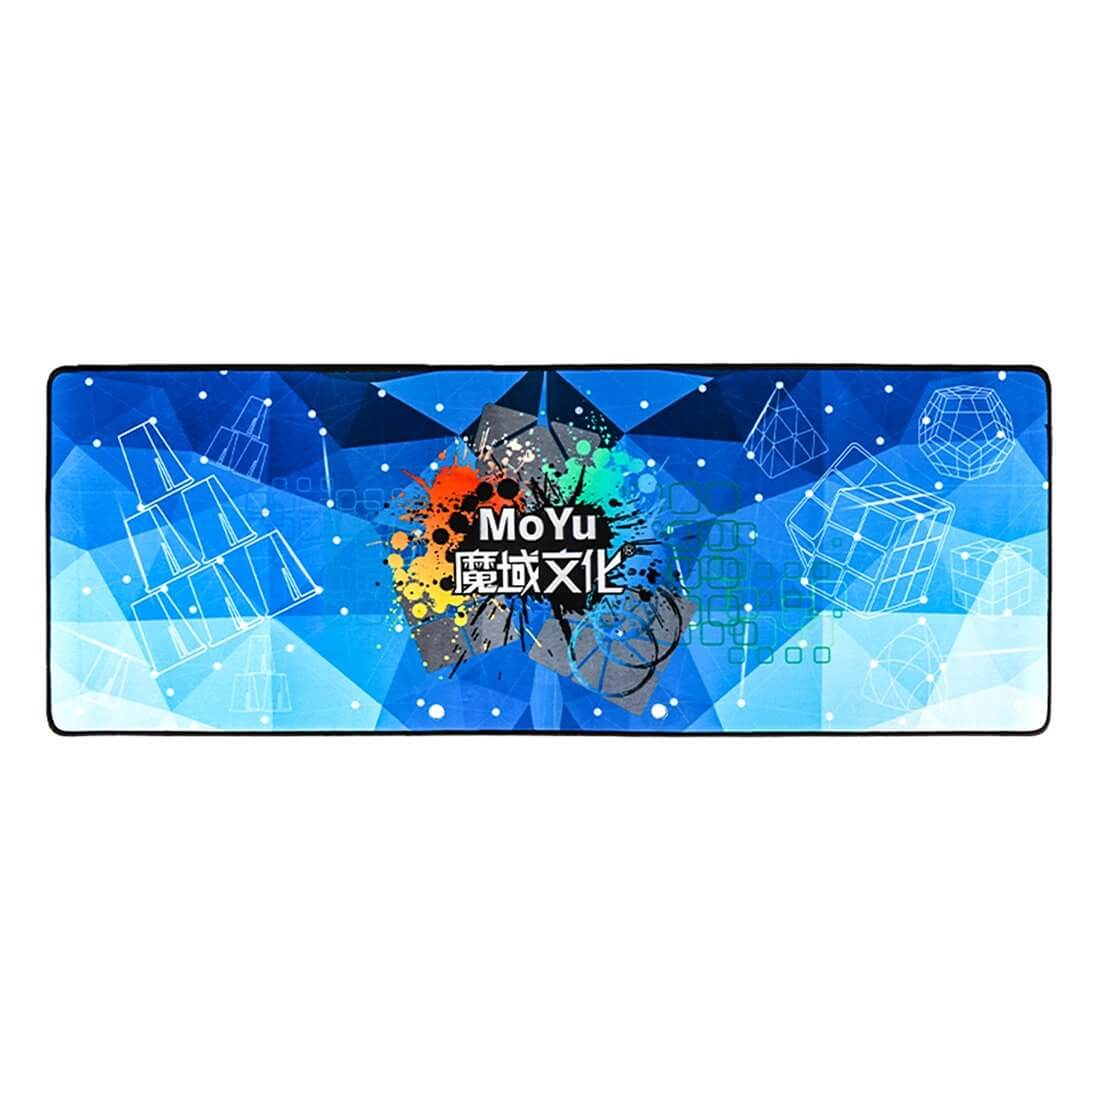 MoYu Mat Soft Non-slip Rubber Mat for Magic Cube Game